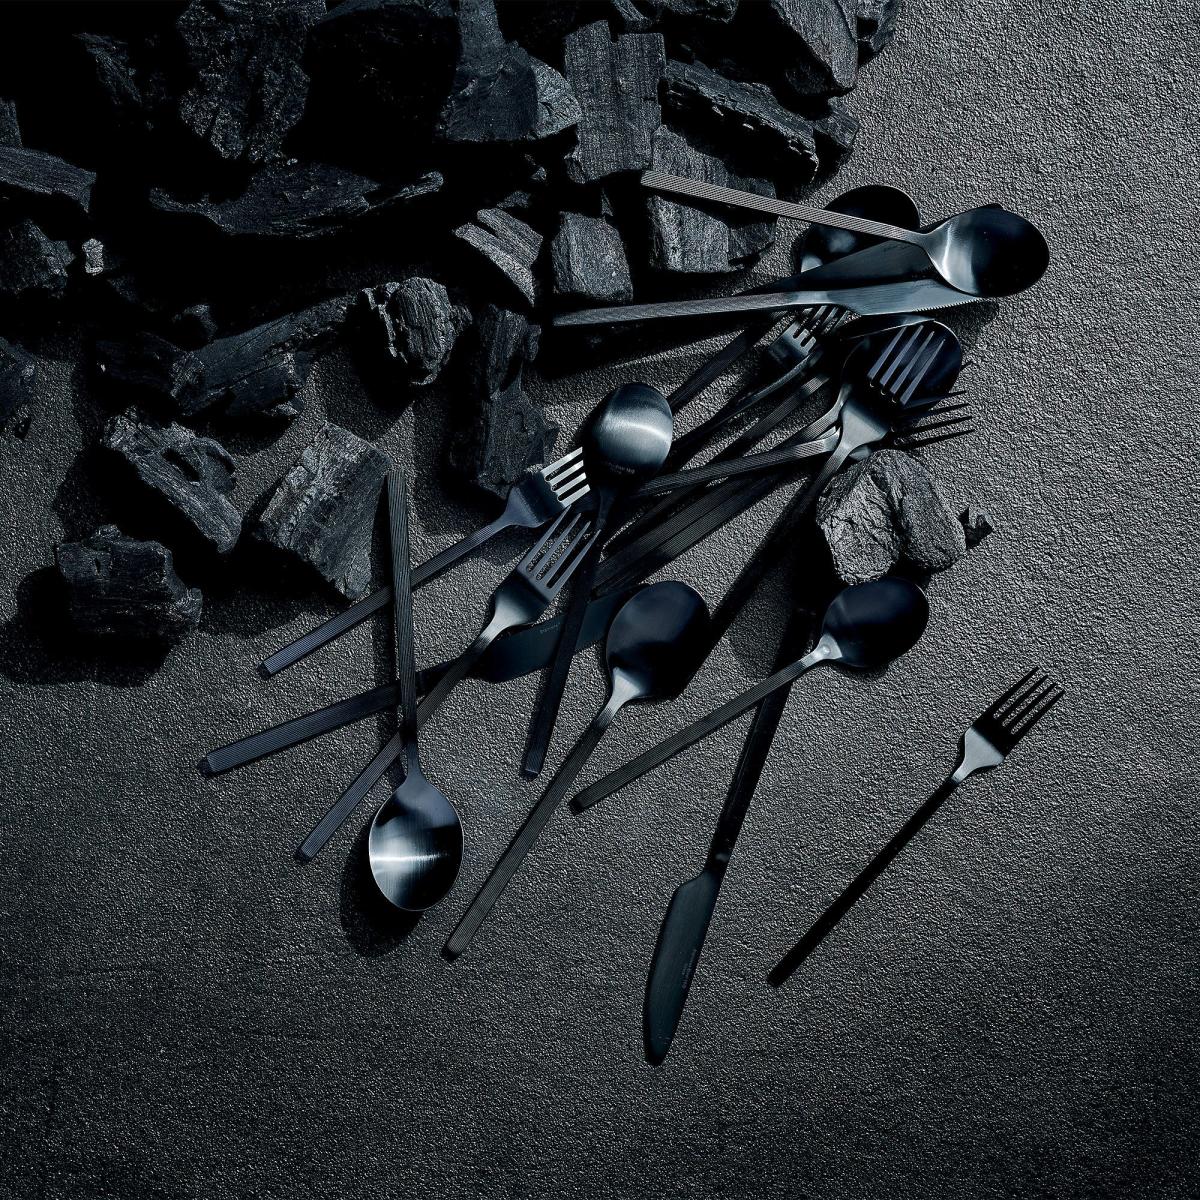 SHARECOOK matte black silverware set, satin finish 20-piece